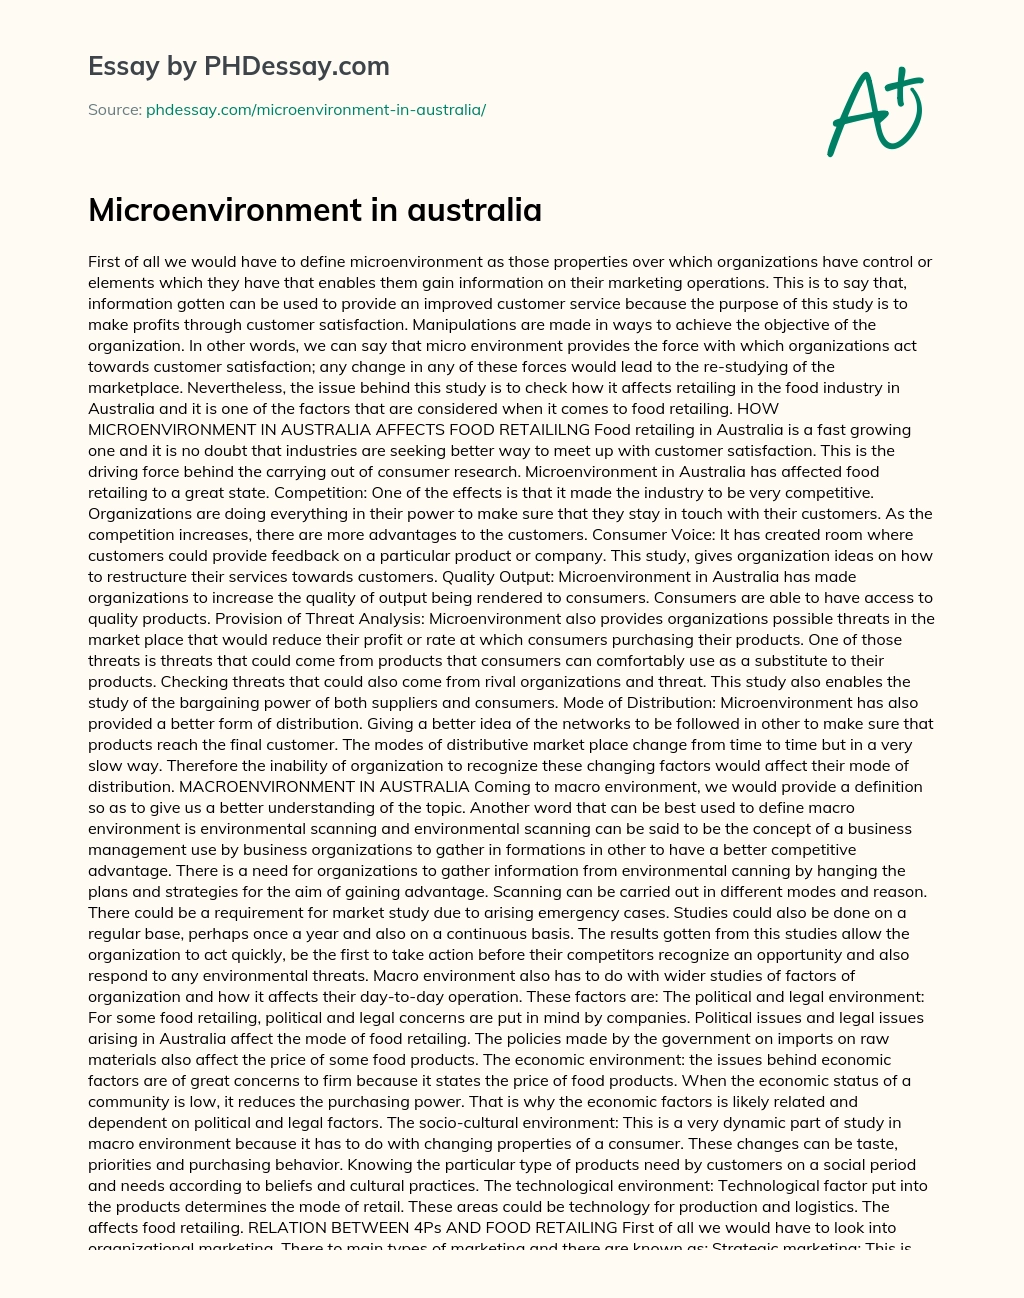 Microenvironment in australia essay